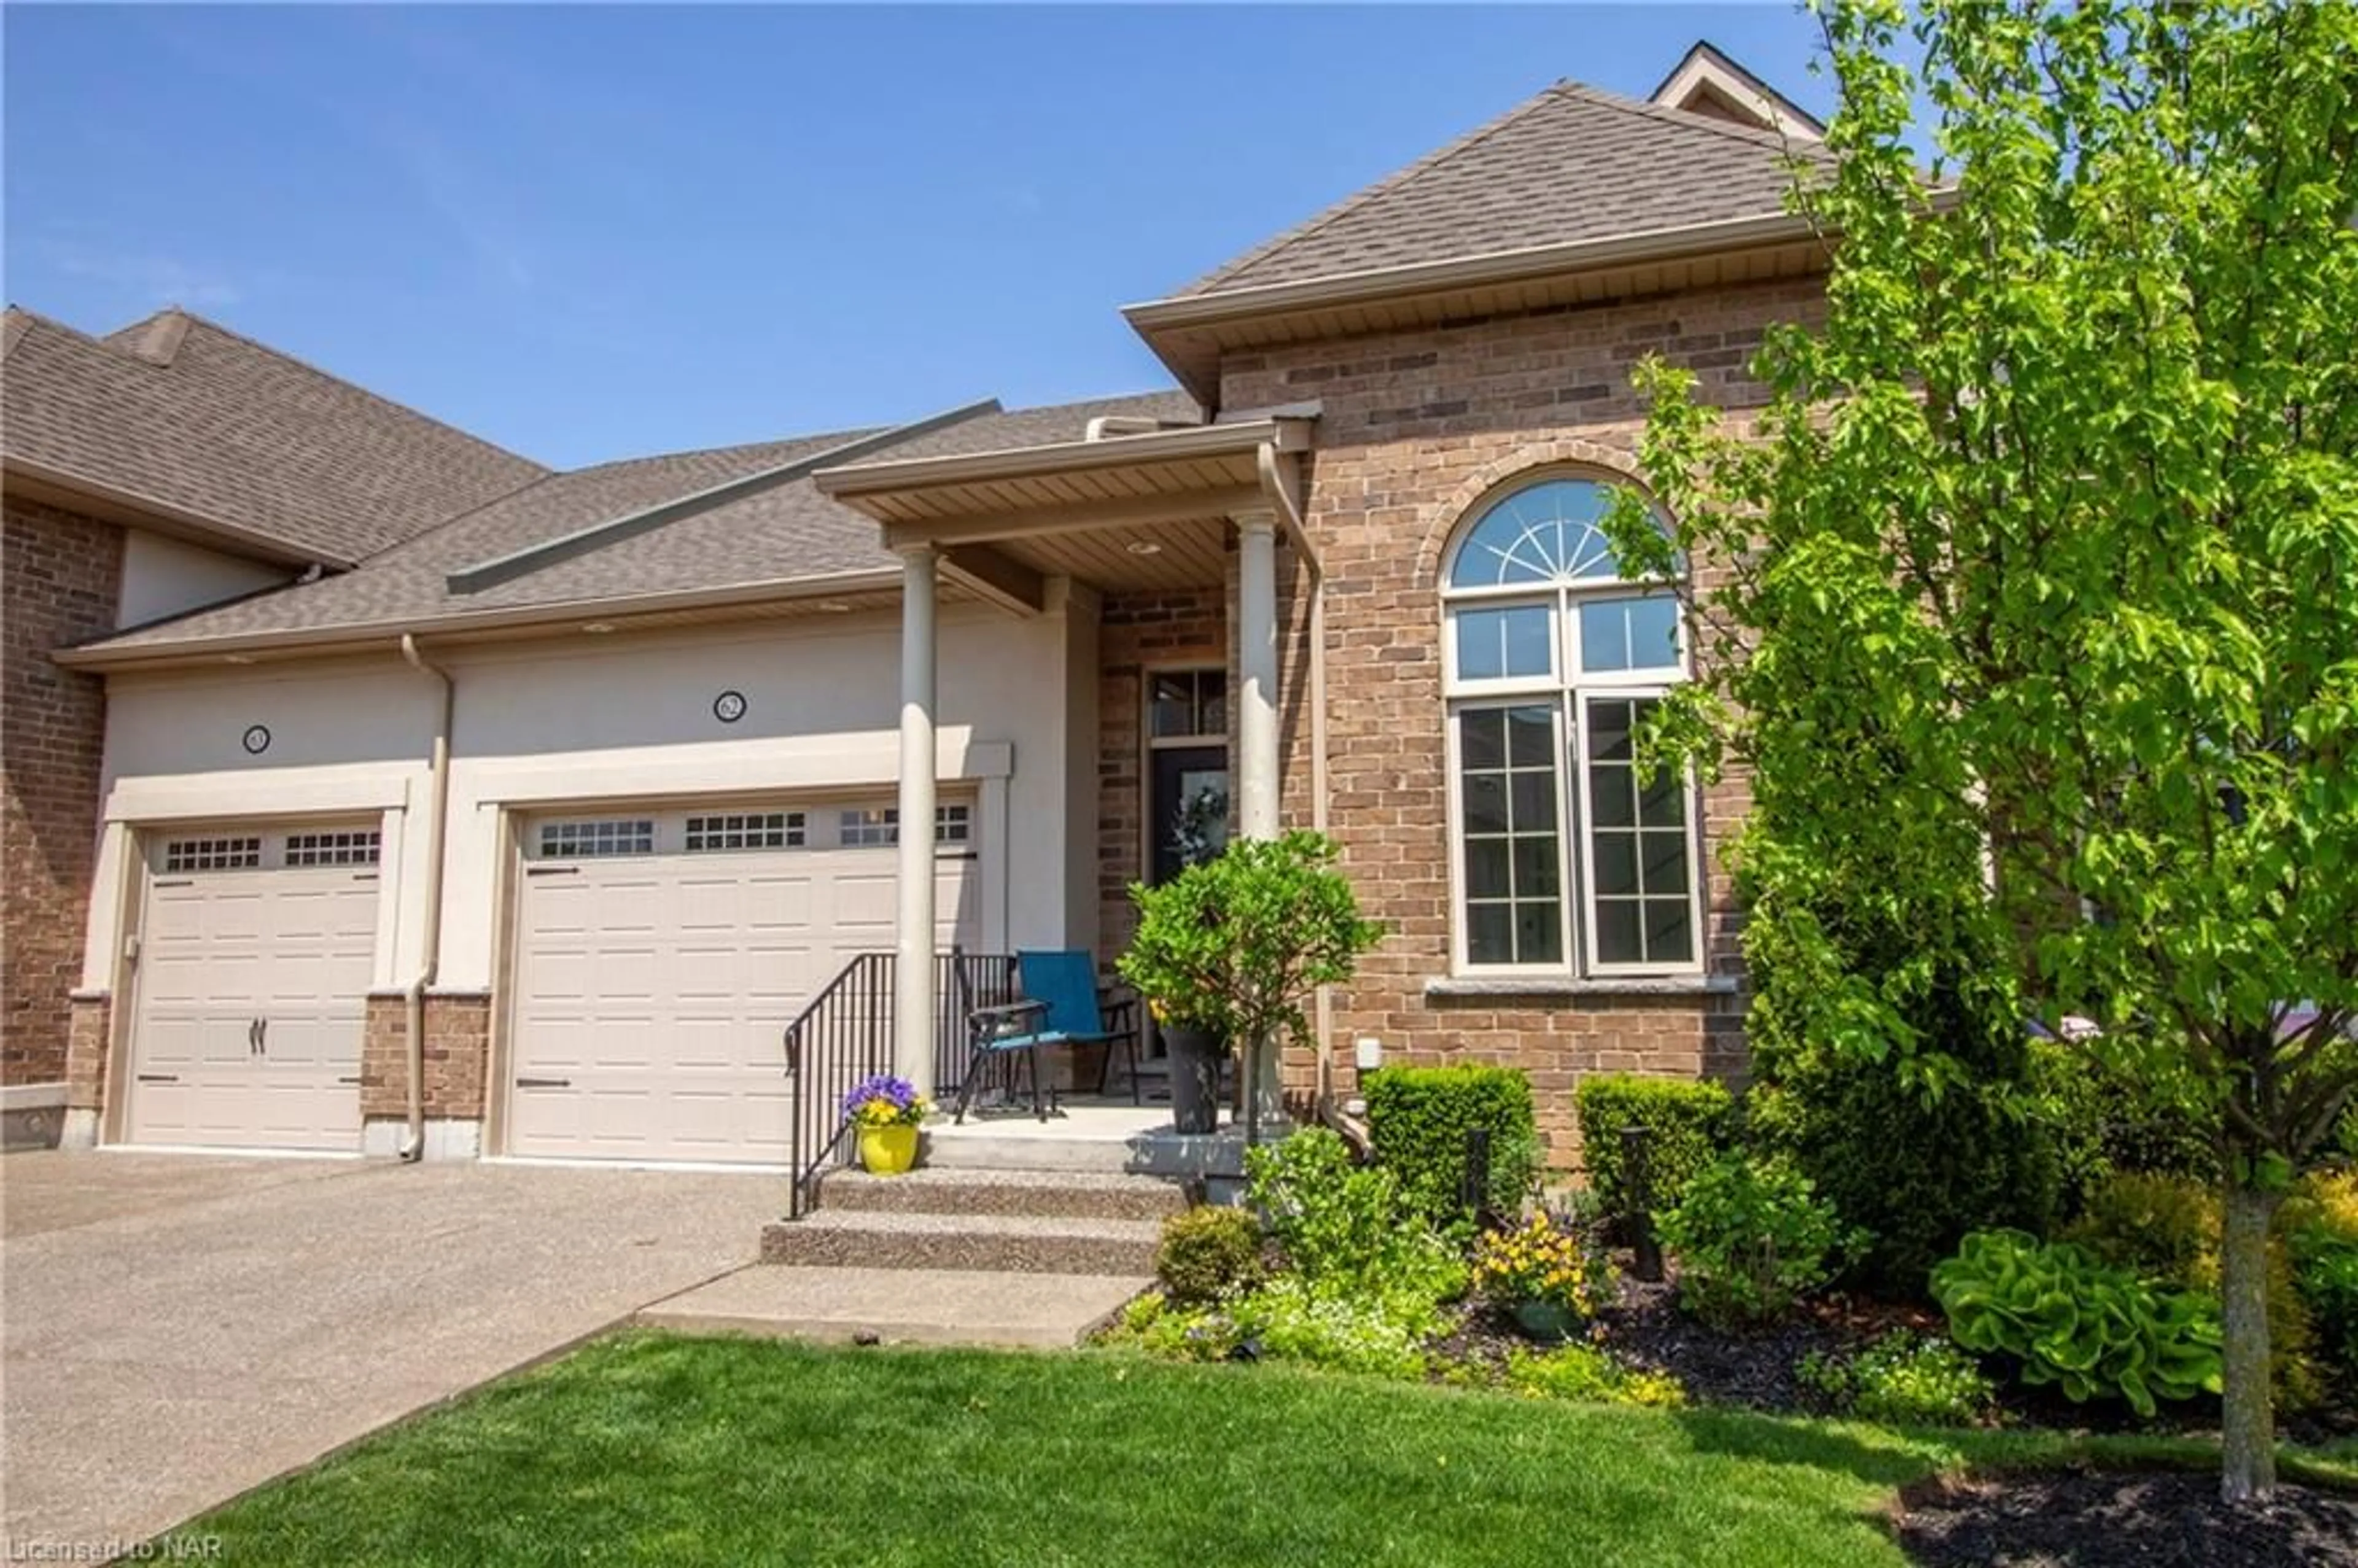 Home with brick exterior material for 3232 Montrose Road Rd #62, Niagara Falls Ontario L2H 0E8